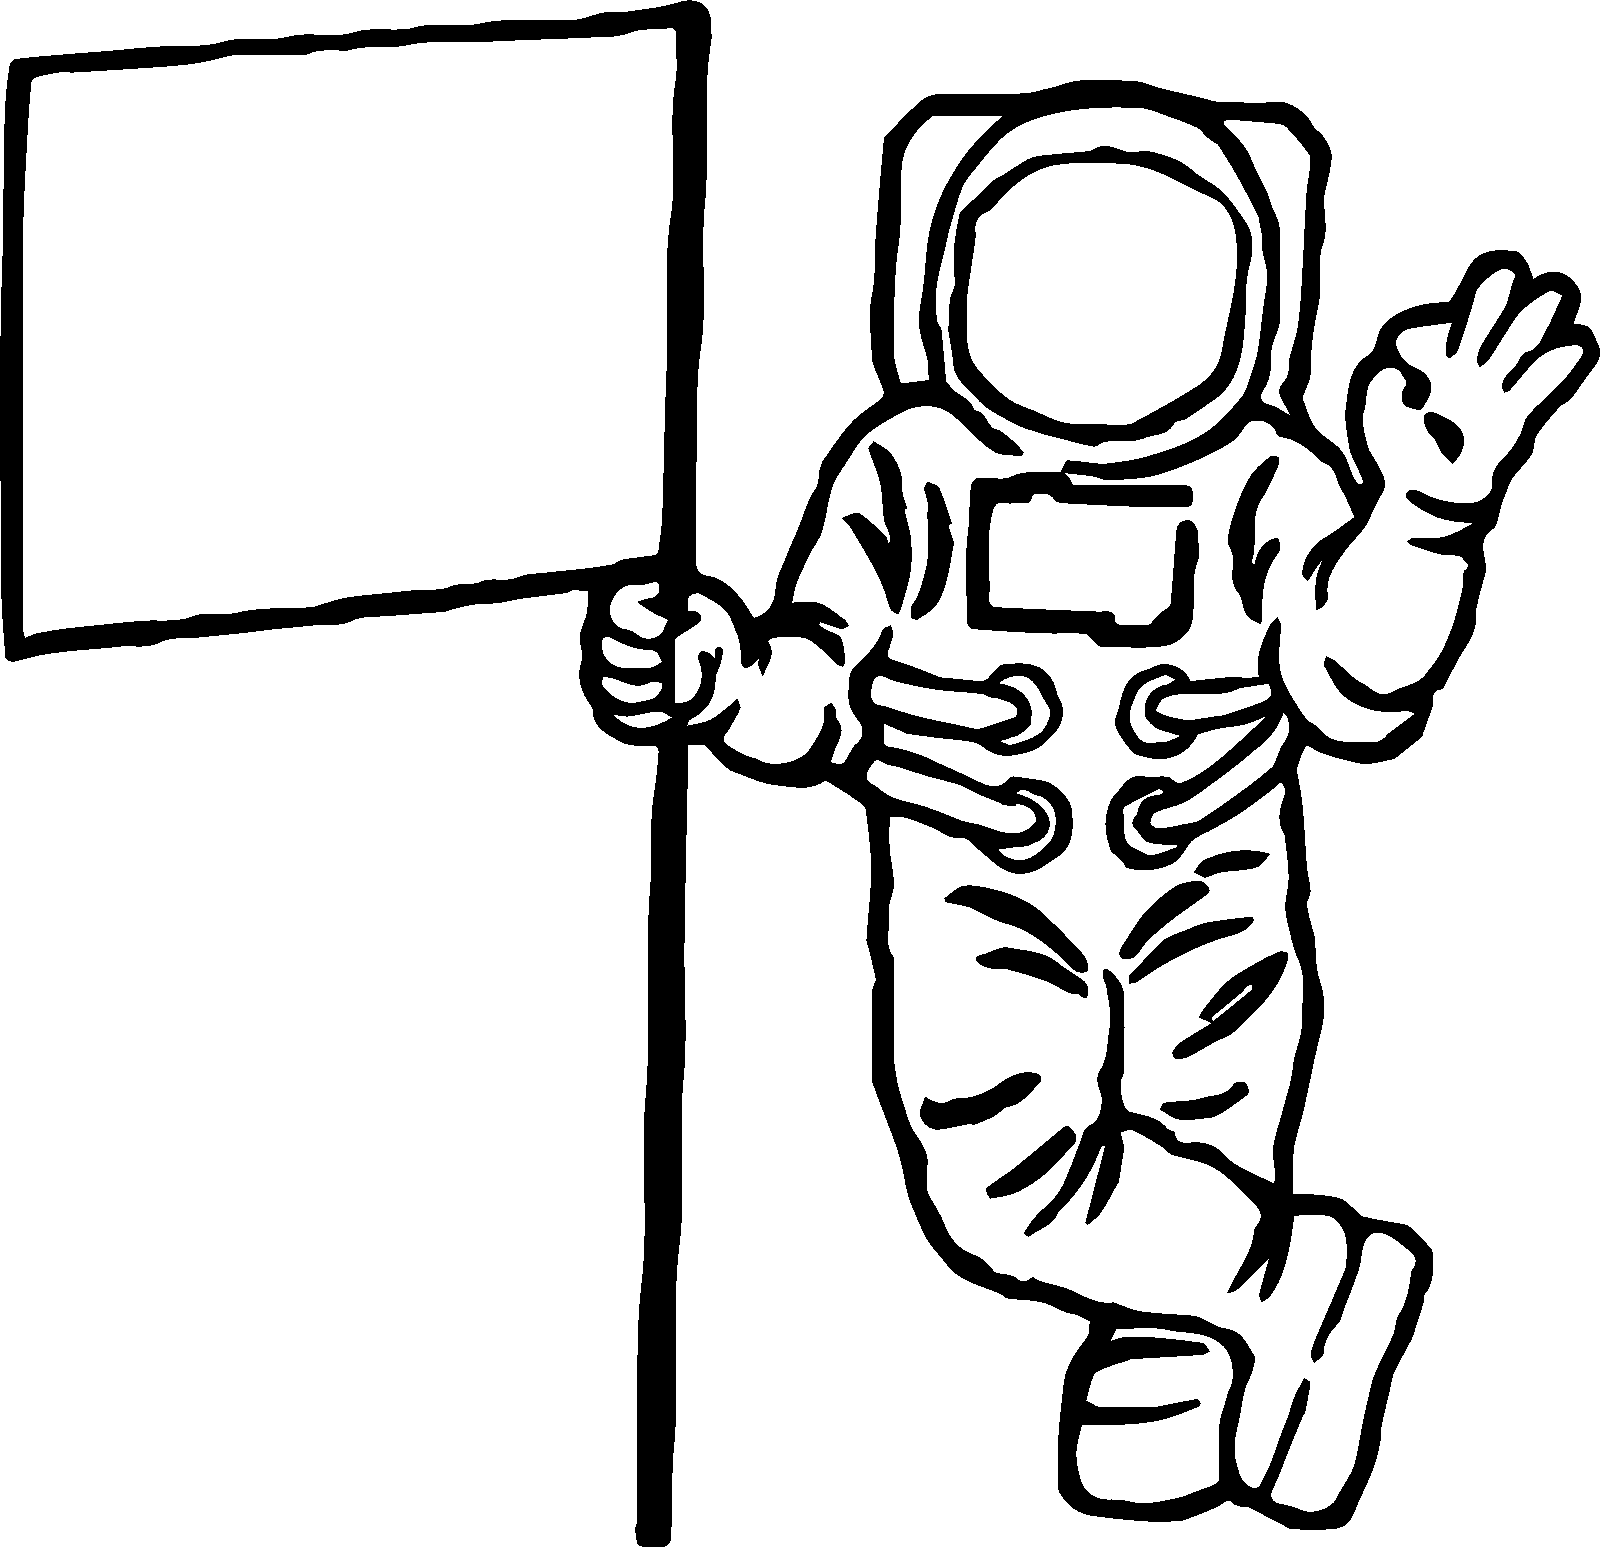 Astronaut clipart black. 